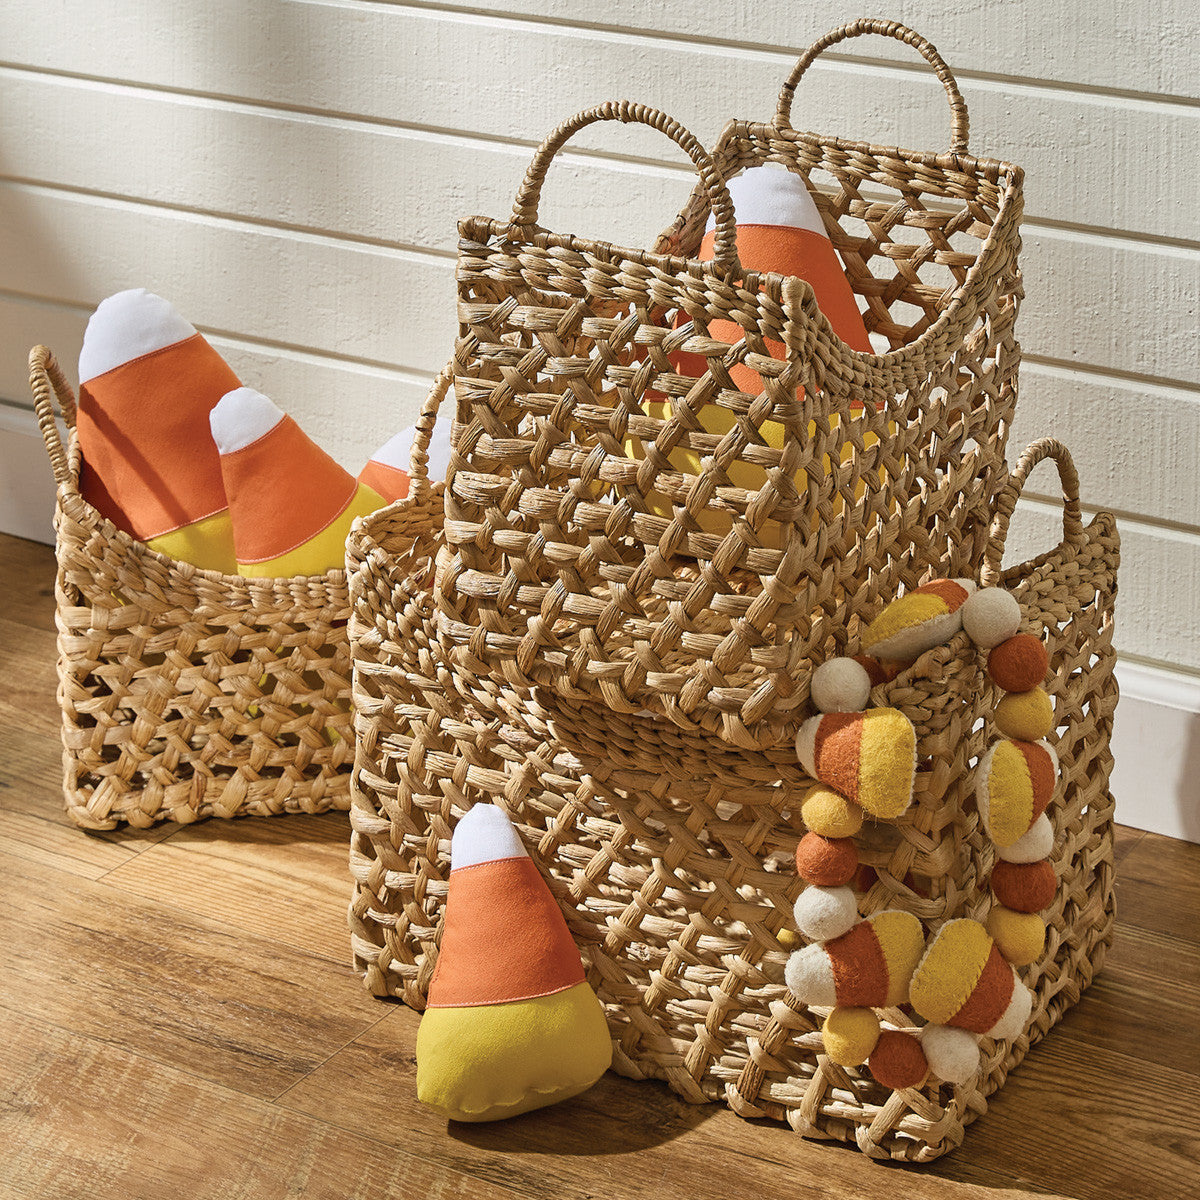 Water Hyacinth Decorative Basket, Wicker Baskets